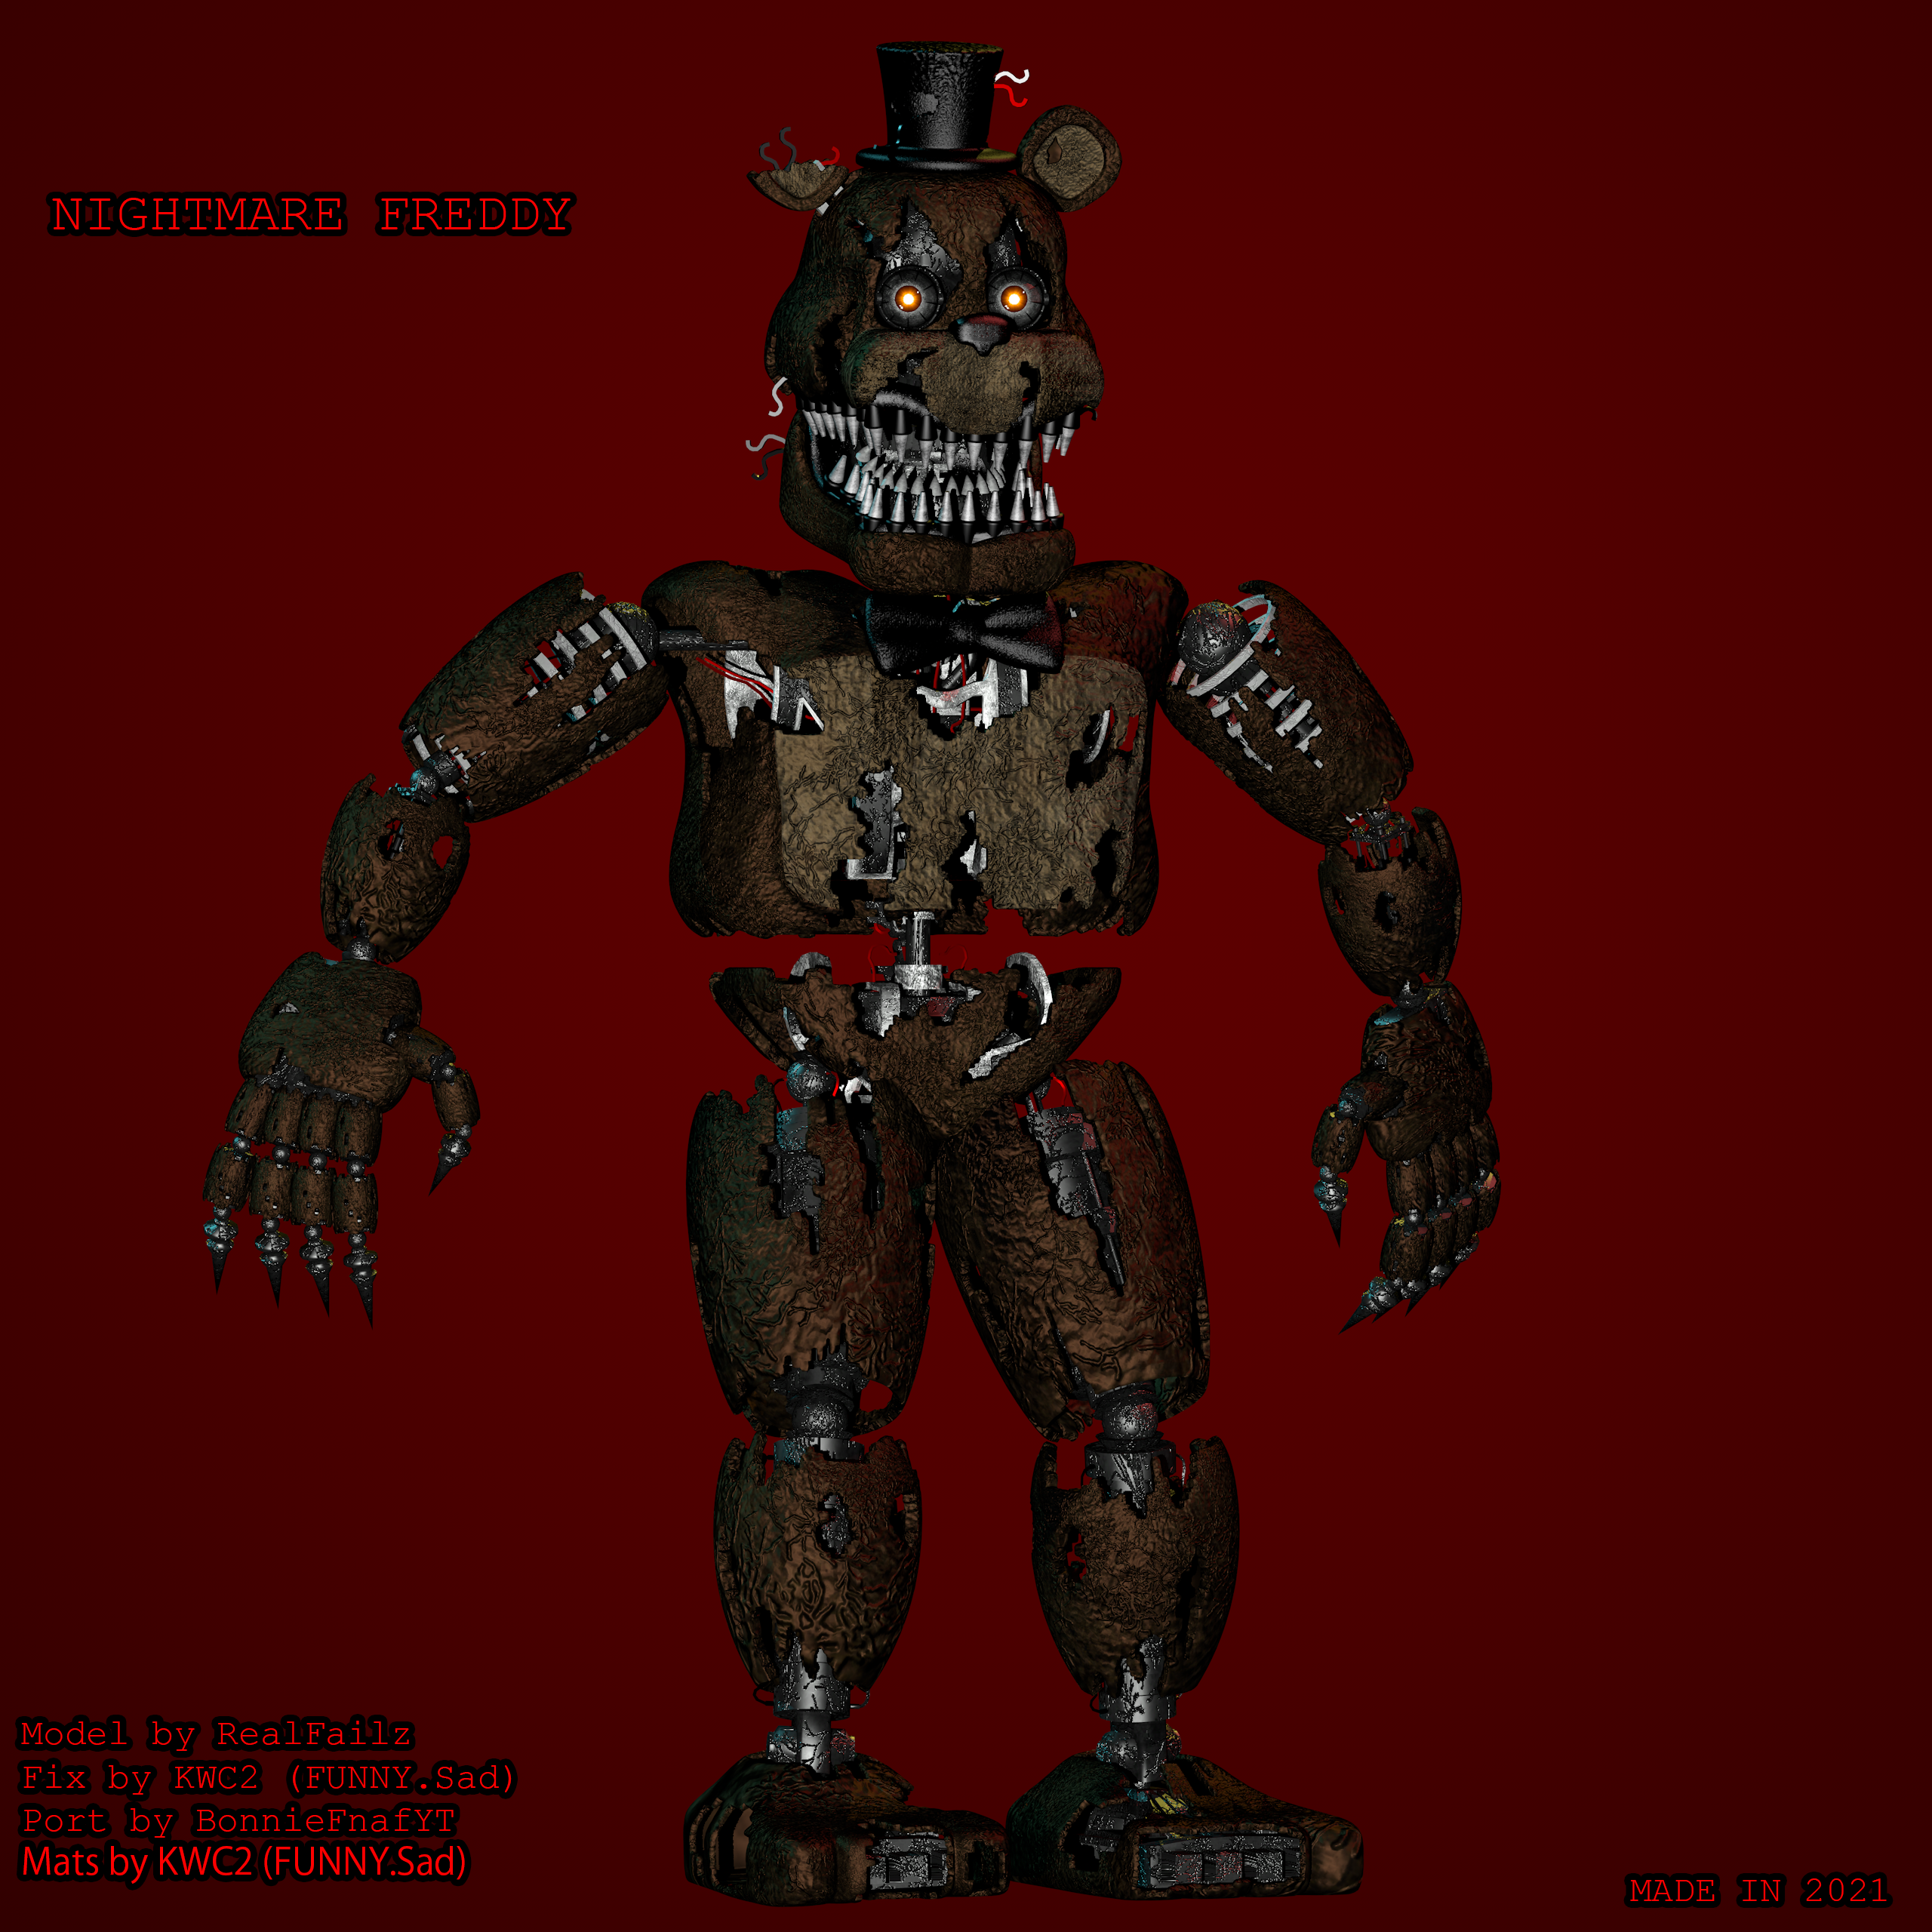 ArtStation - Nightmare Freddy from FNAF